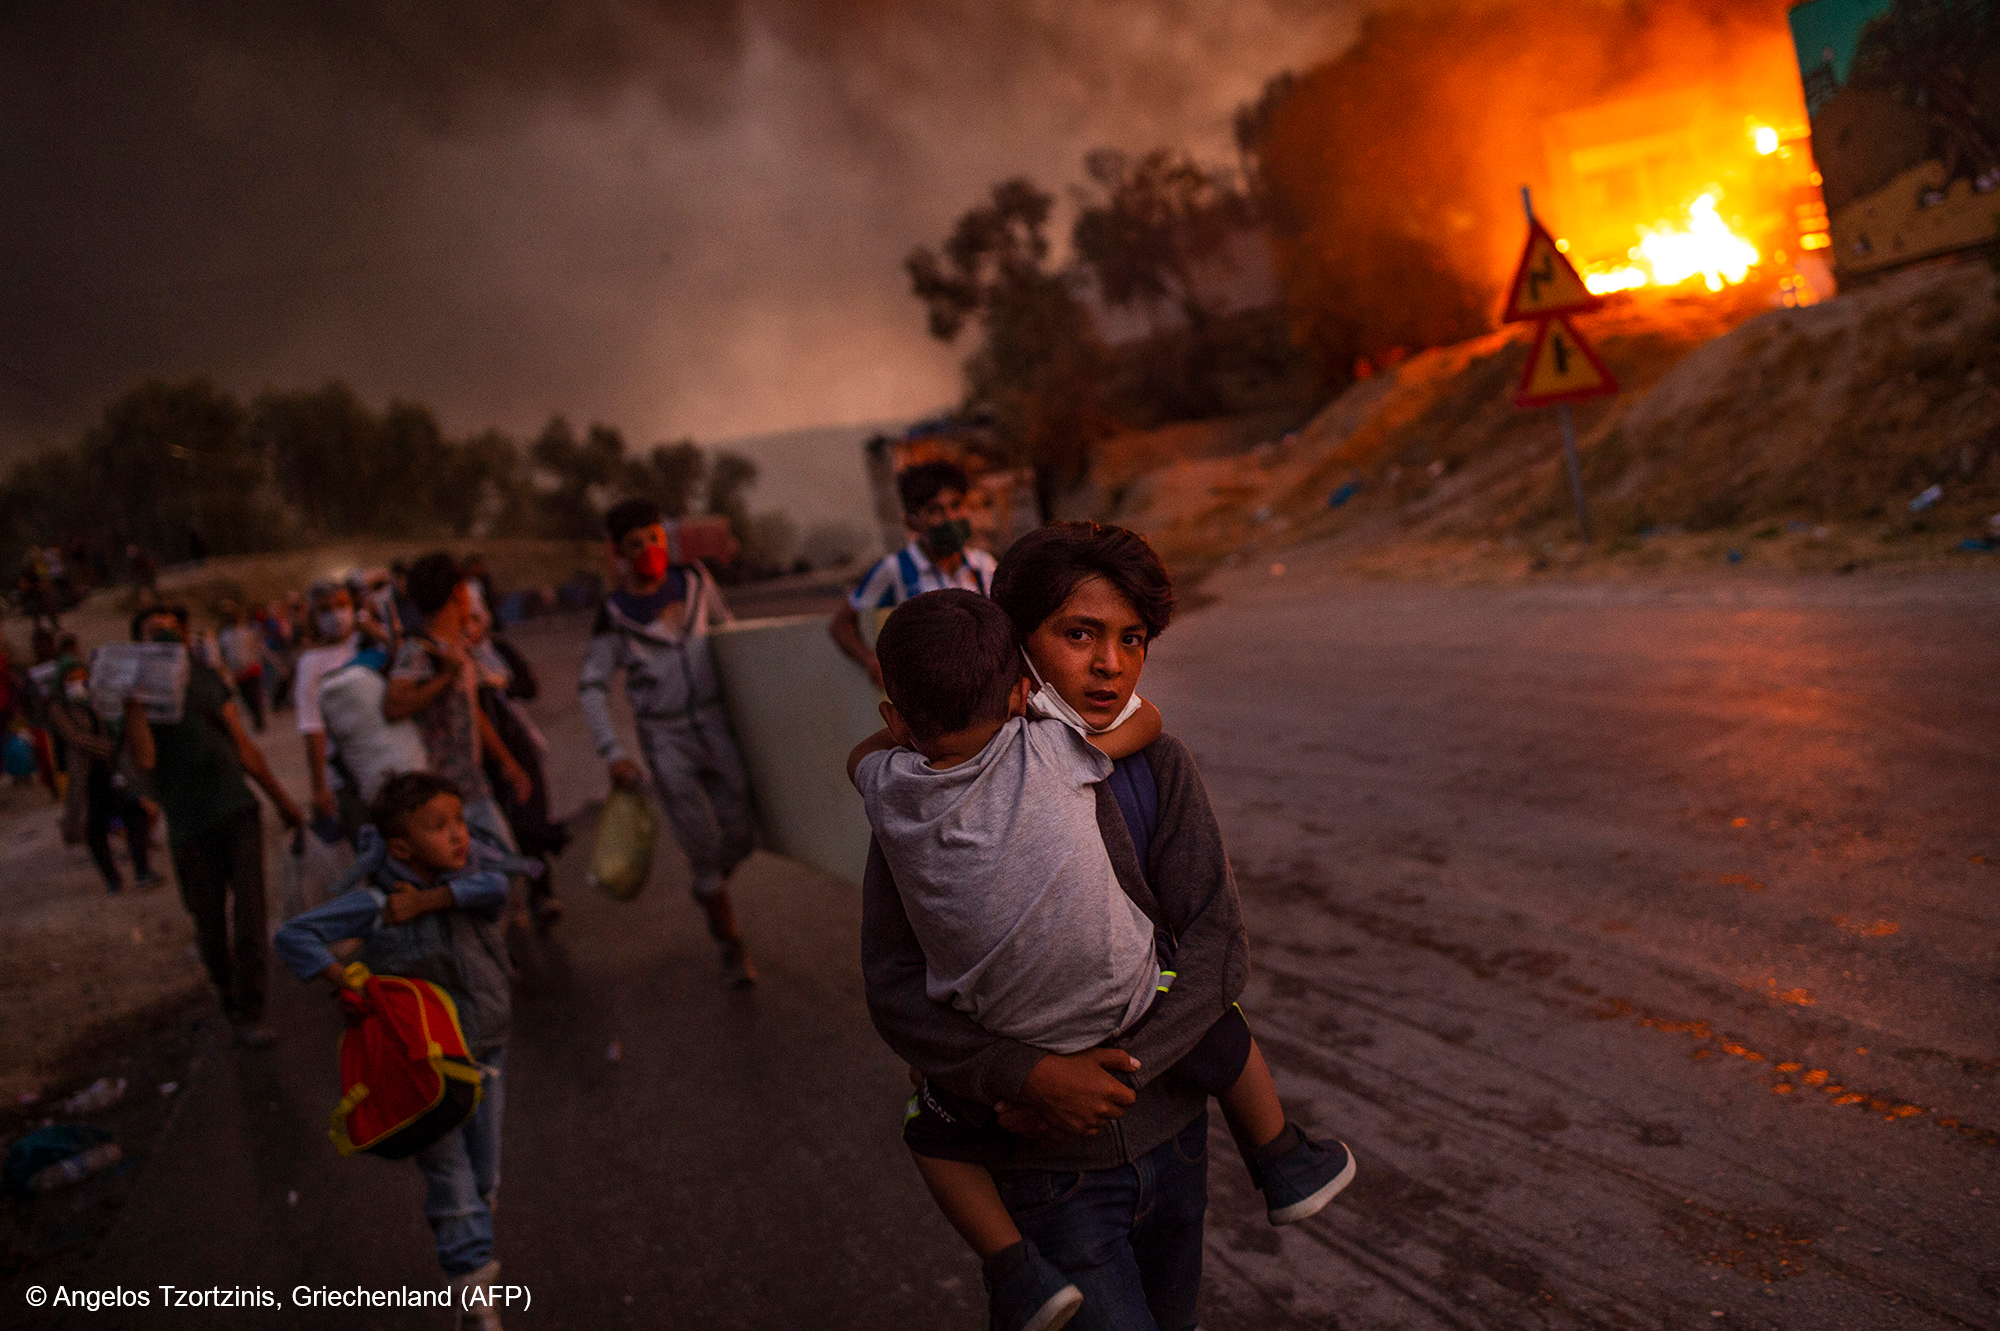 UNICEF-Foto des Jahres 2020: Die brennende Not (Lesbos, Griechenland) (c) Angelos Tzortzinis, Griechenland (AFP) / UNICEF